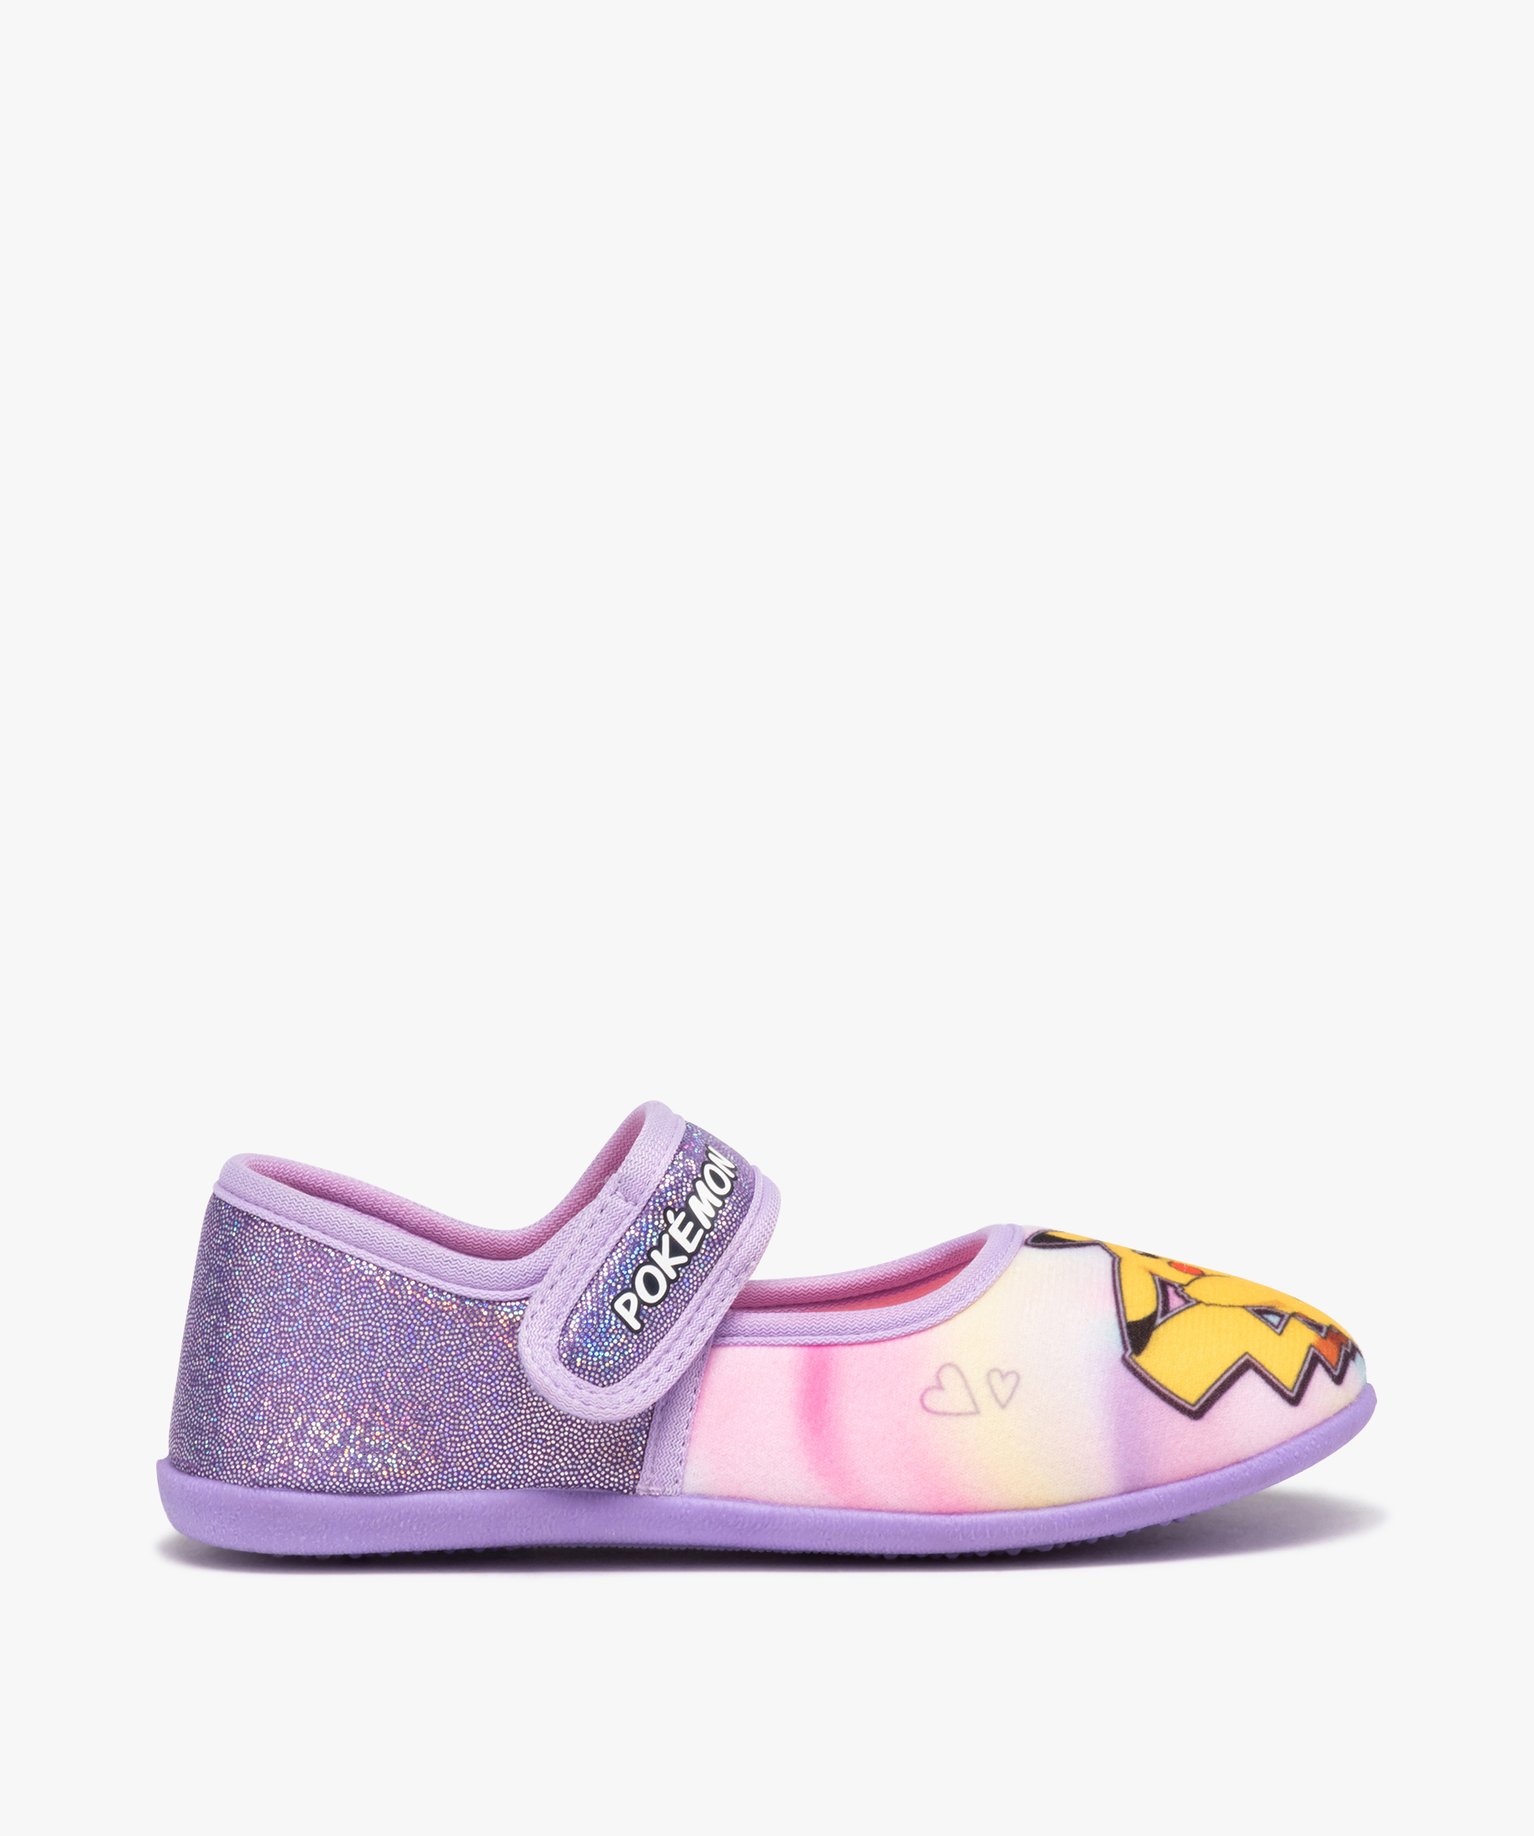 chaussons fille ballerines a scratch pikachu - pokemon violet